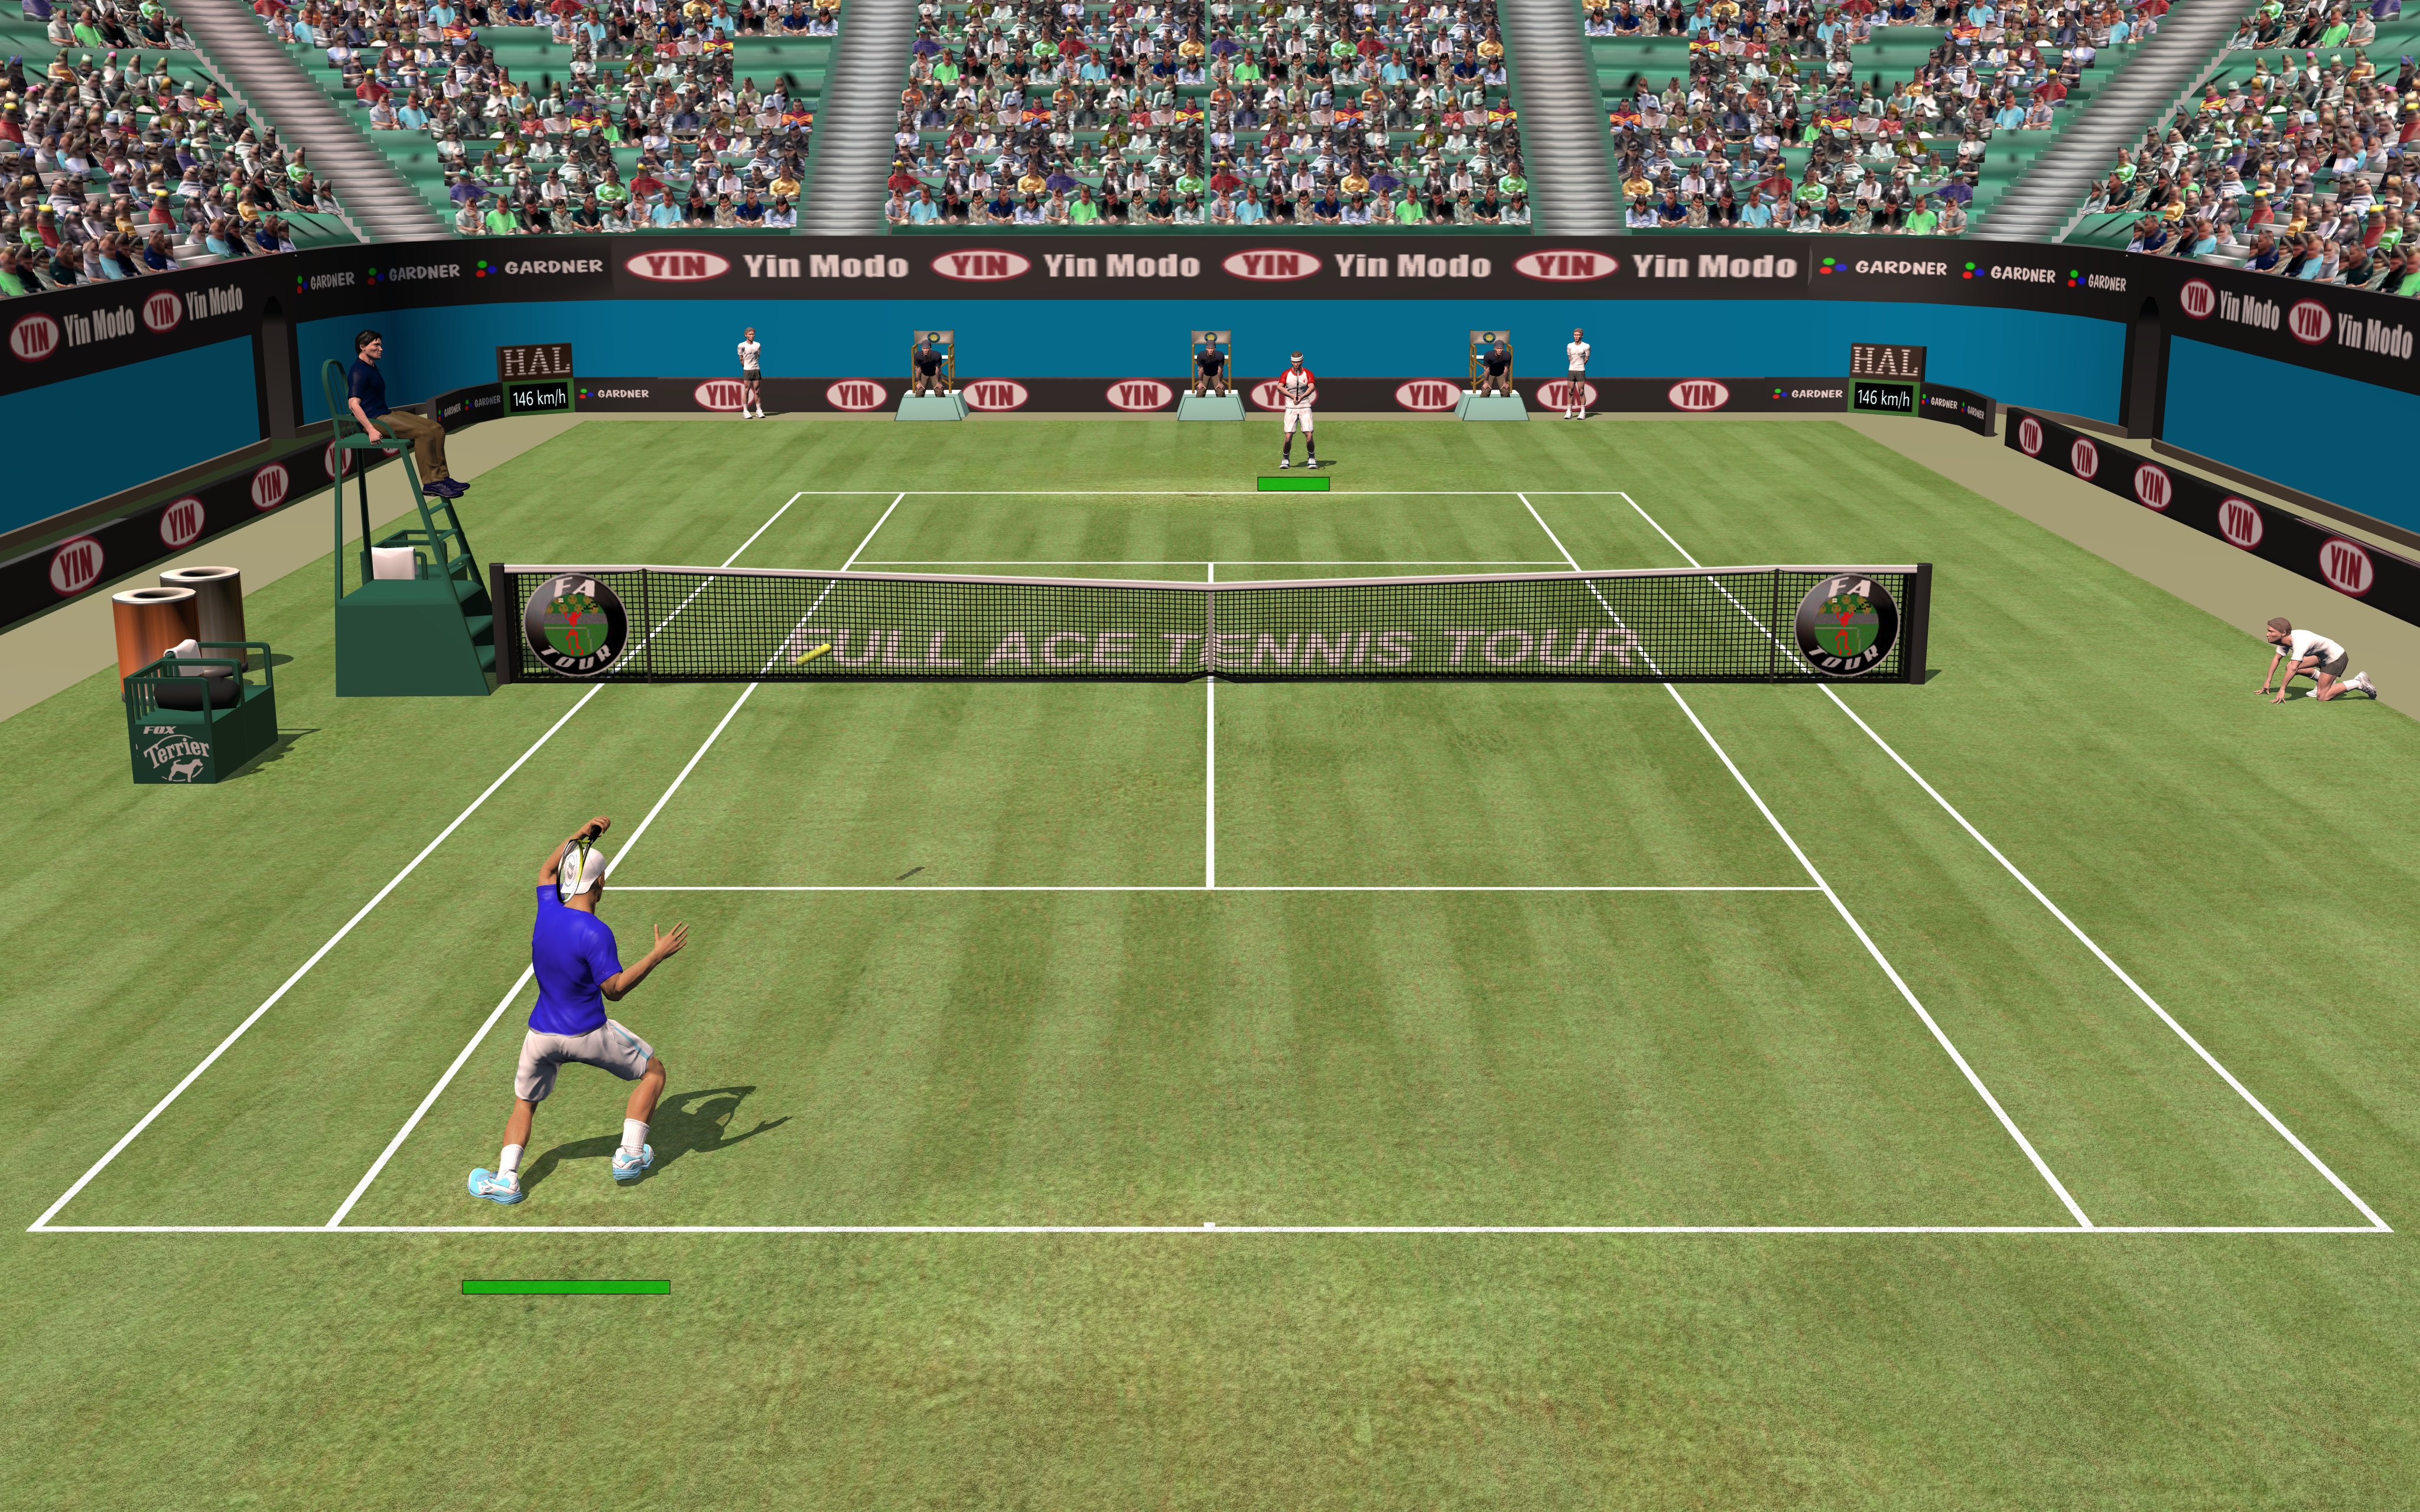 Full Ace Tennis Simulator screenshot